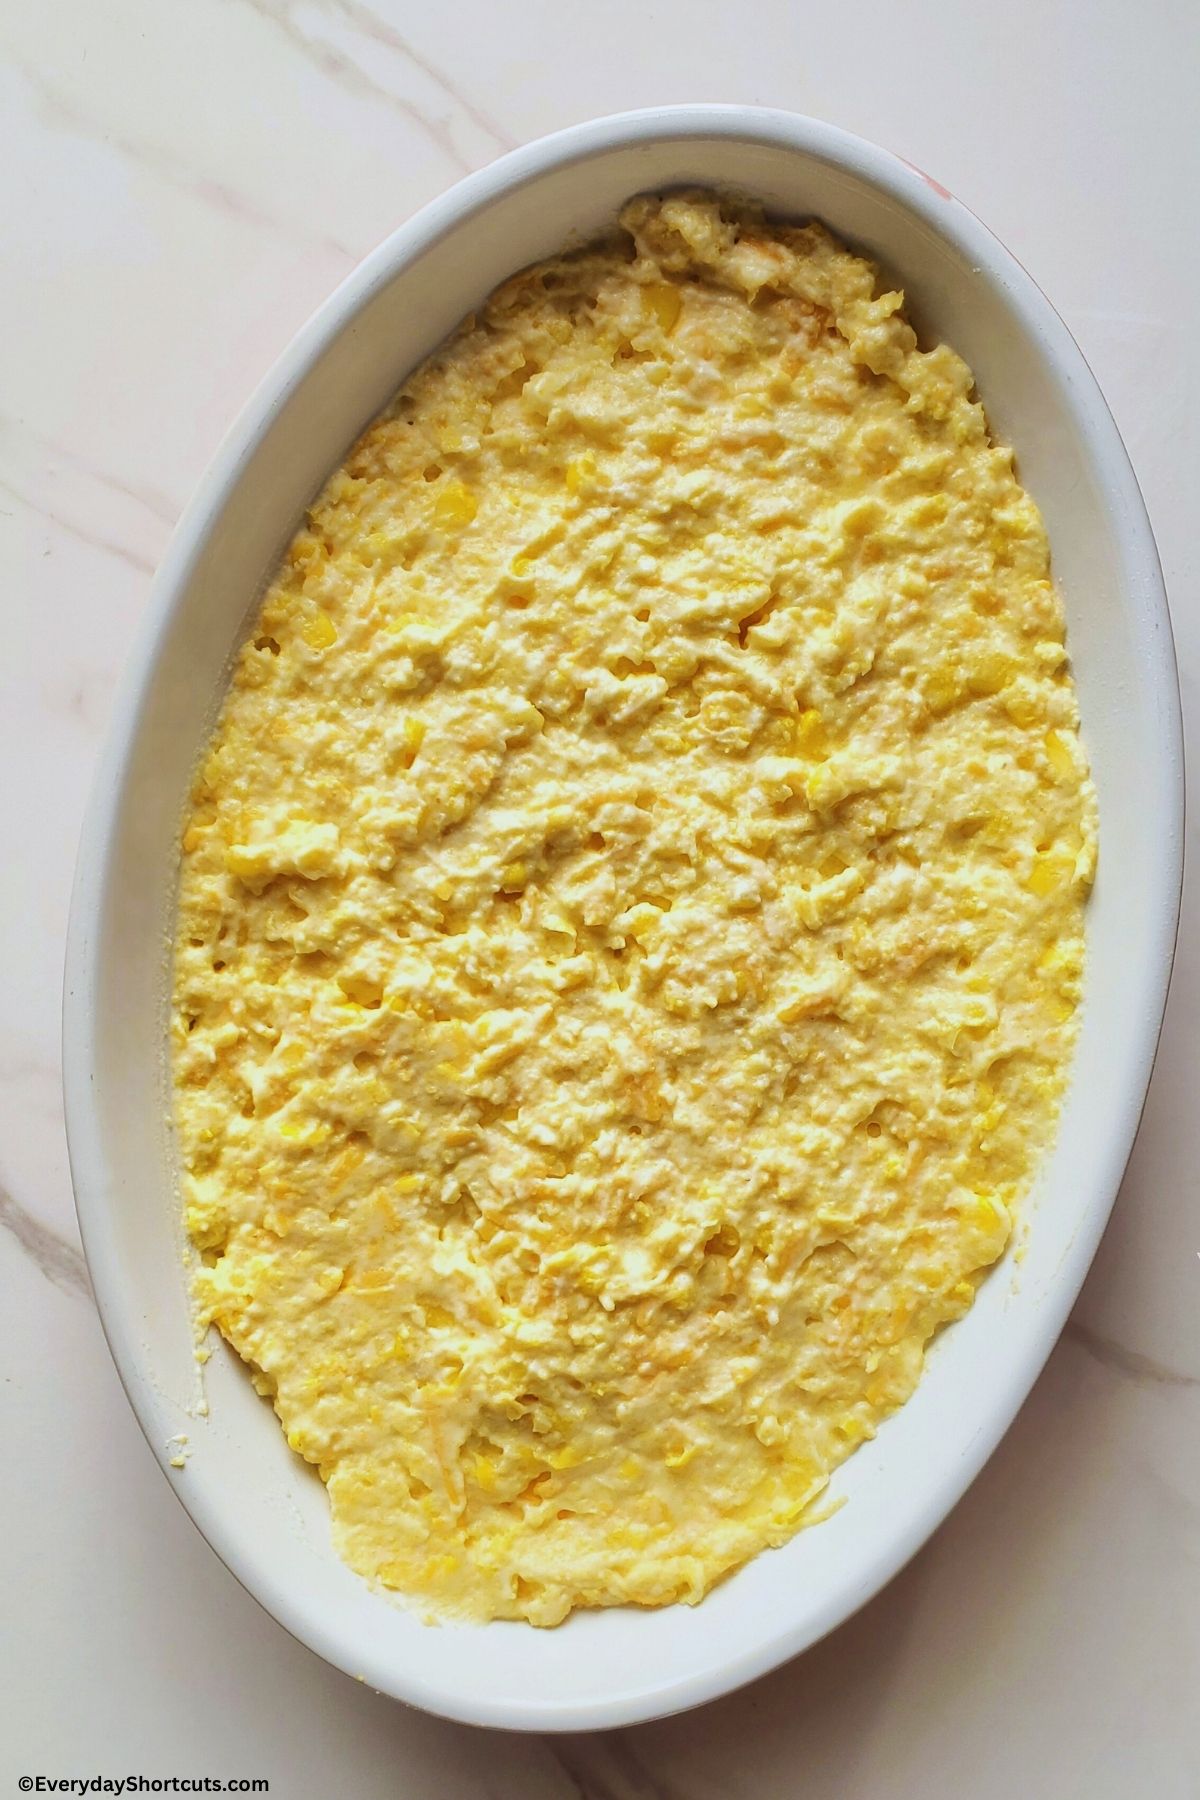 corn cheese cornbread mix spread evenly in a baking dish